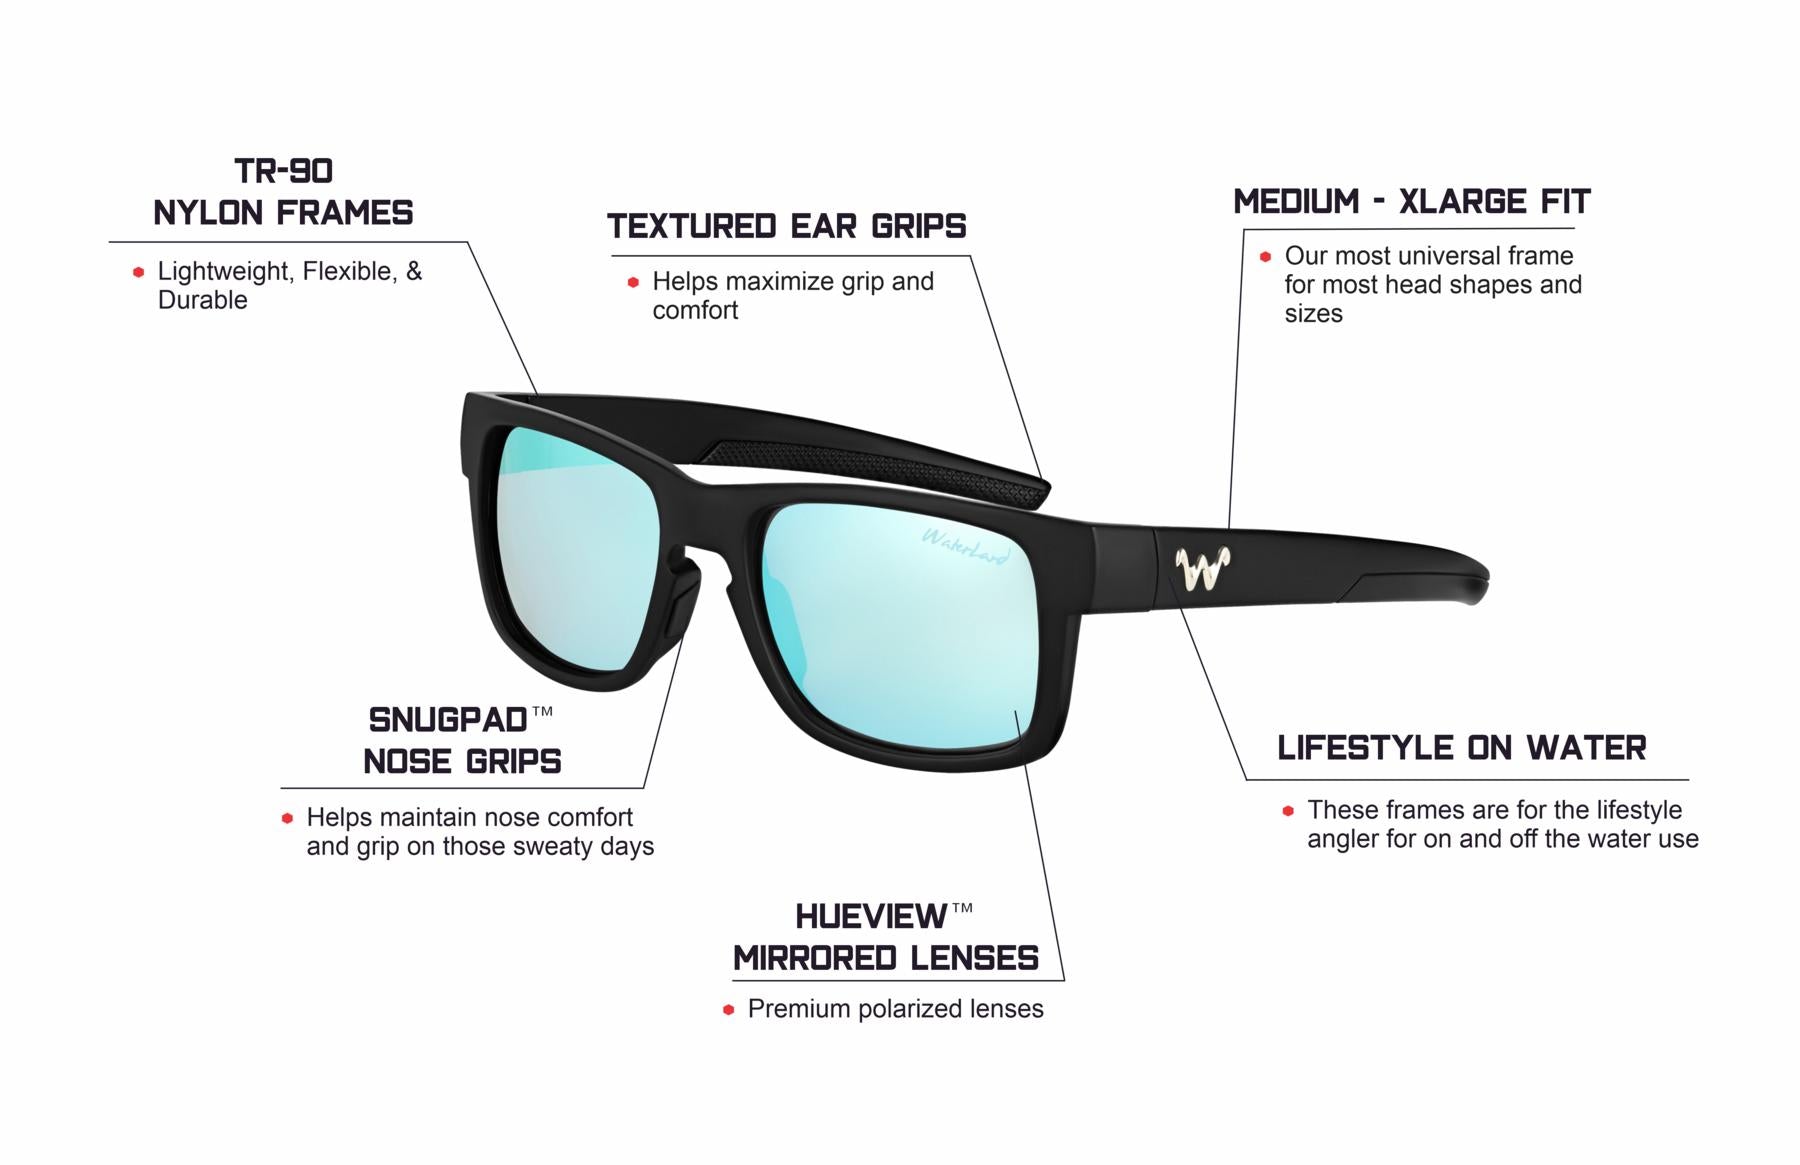 Waterland Hybro Sunglasses Black/Blue Mirror